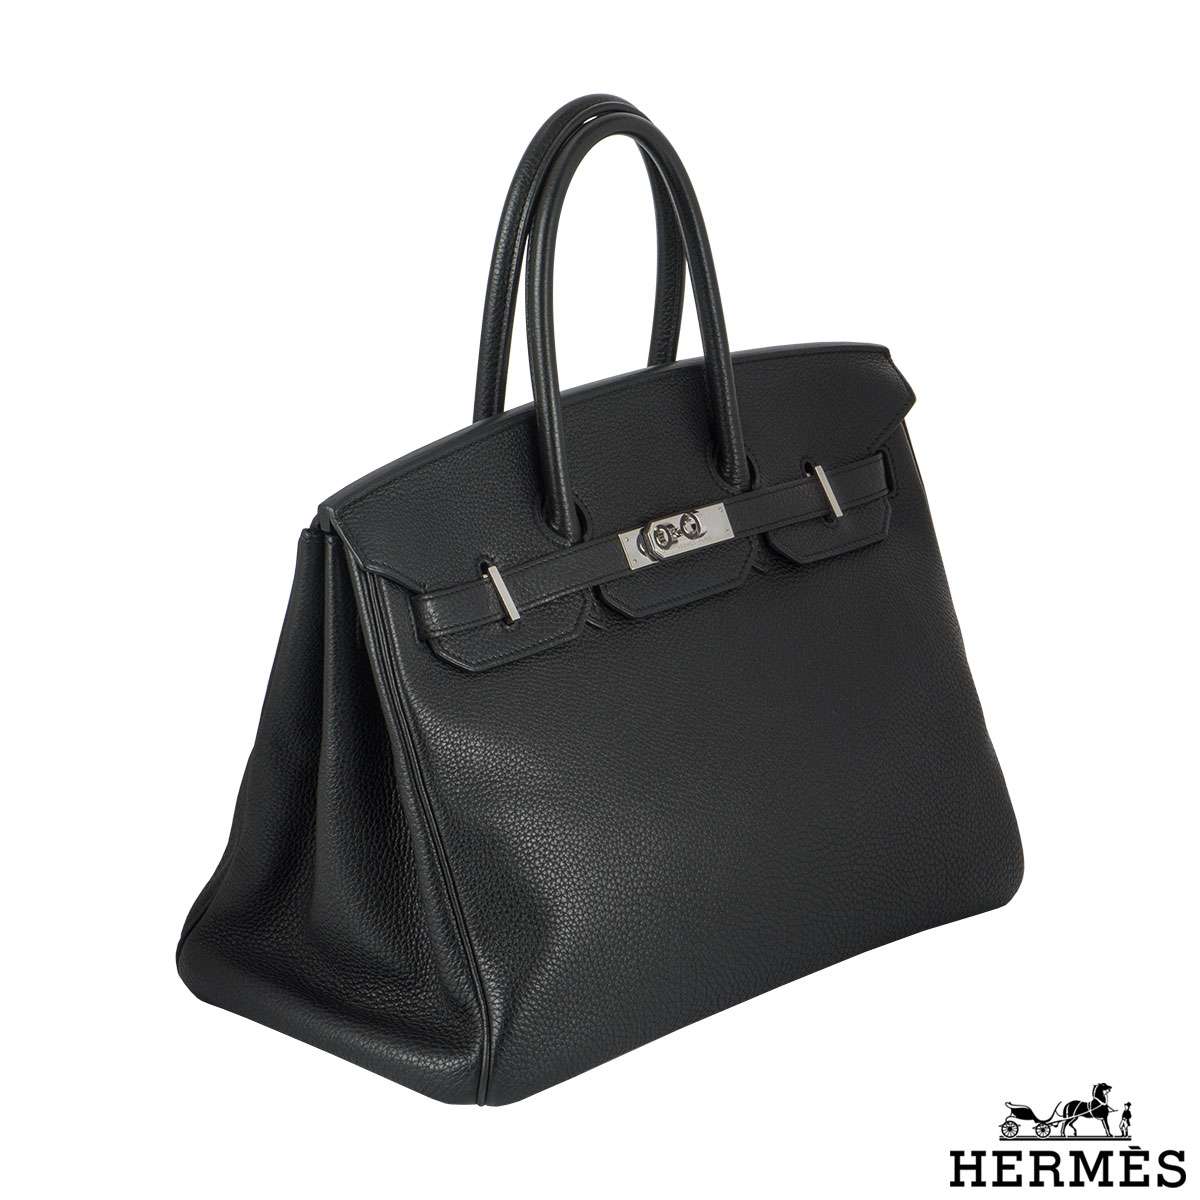 Hermès Black Birkin 35cm of Togo Leather with Palladium